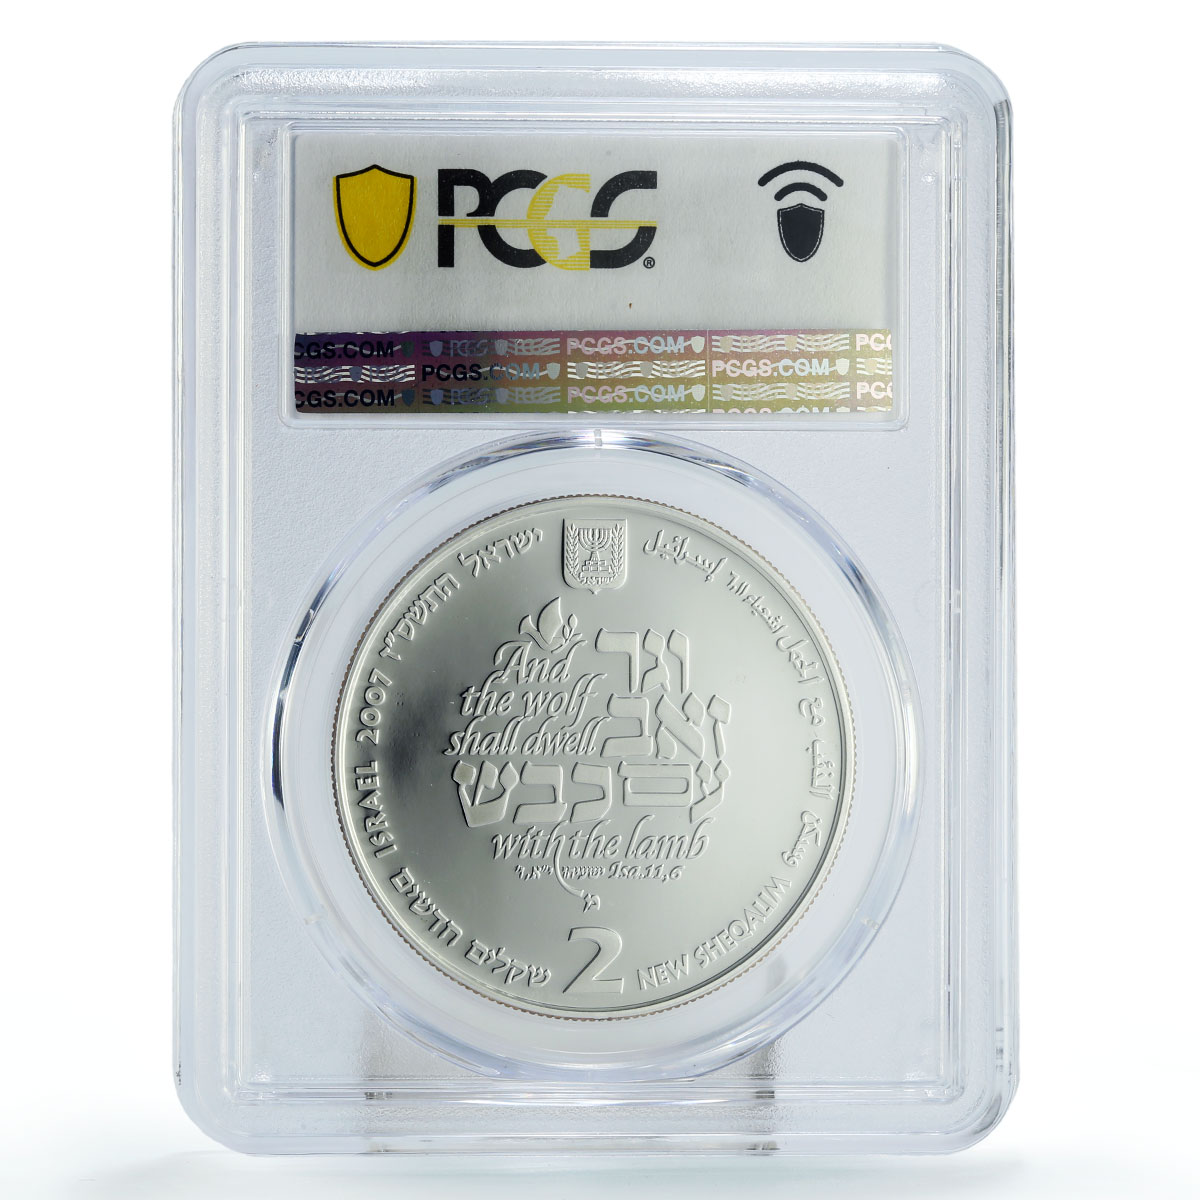 Israel 2 sheqalim Biblical Art Wolf and Lamb Tale PR69 PCGS silver coin 2007